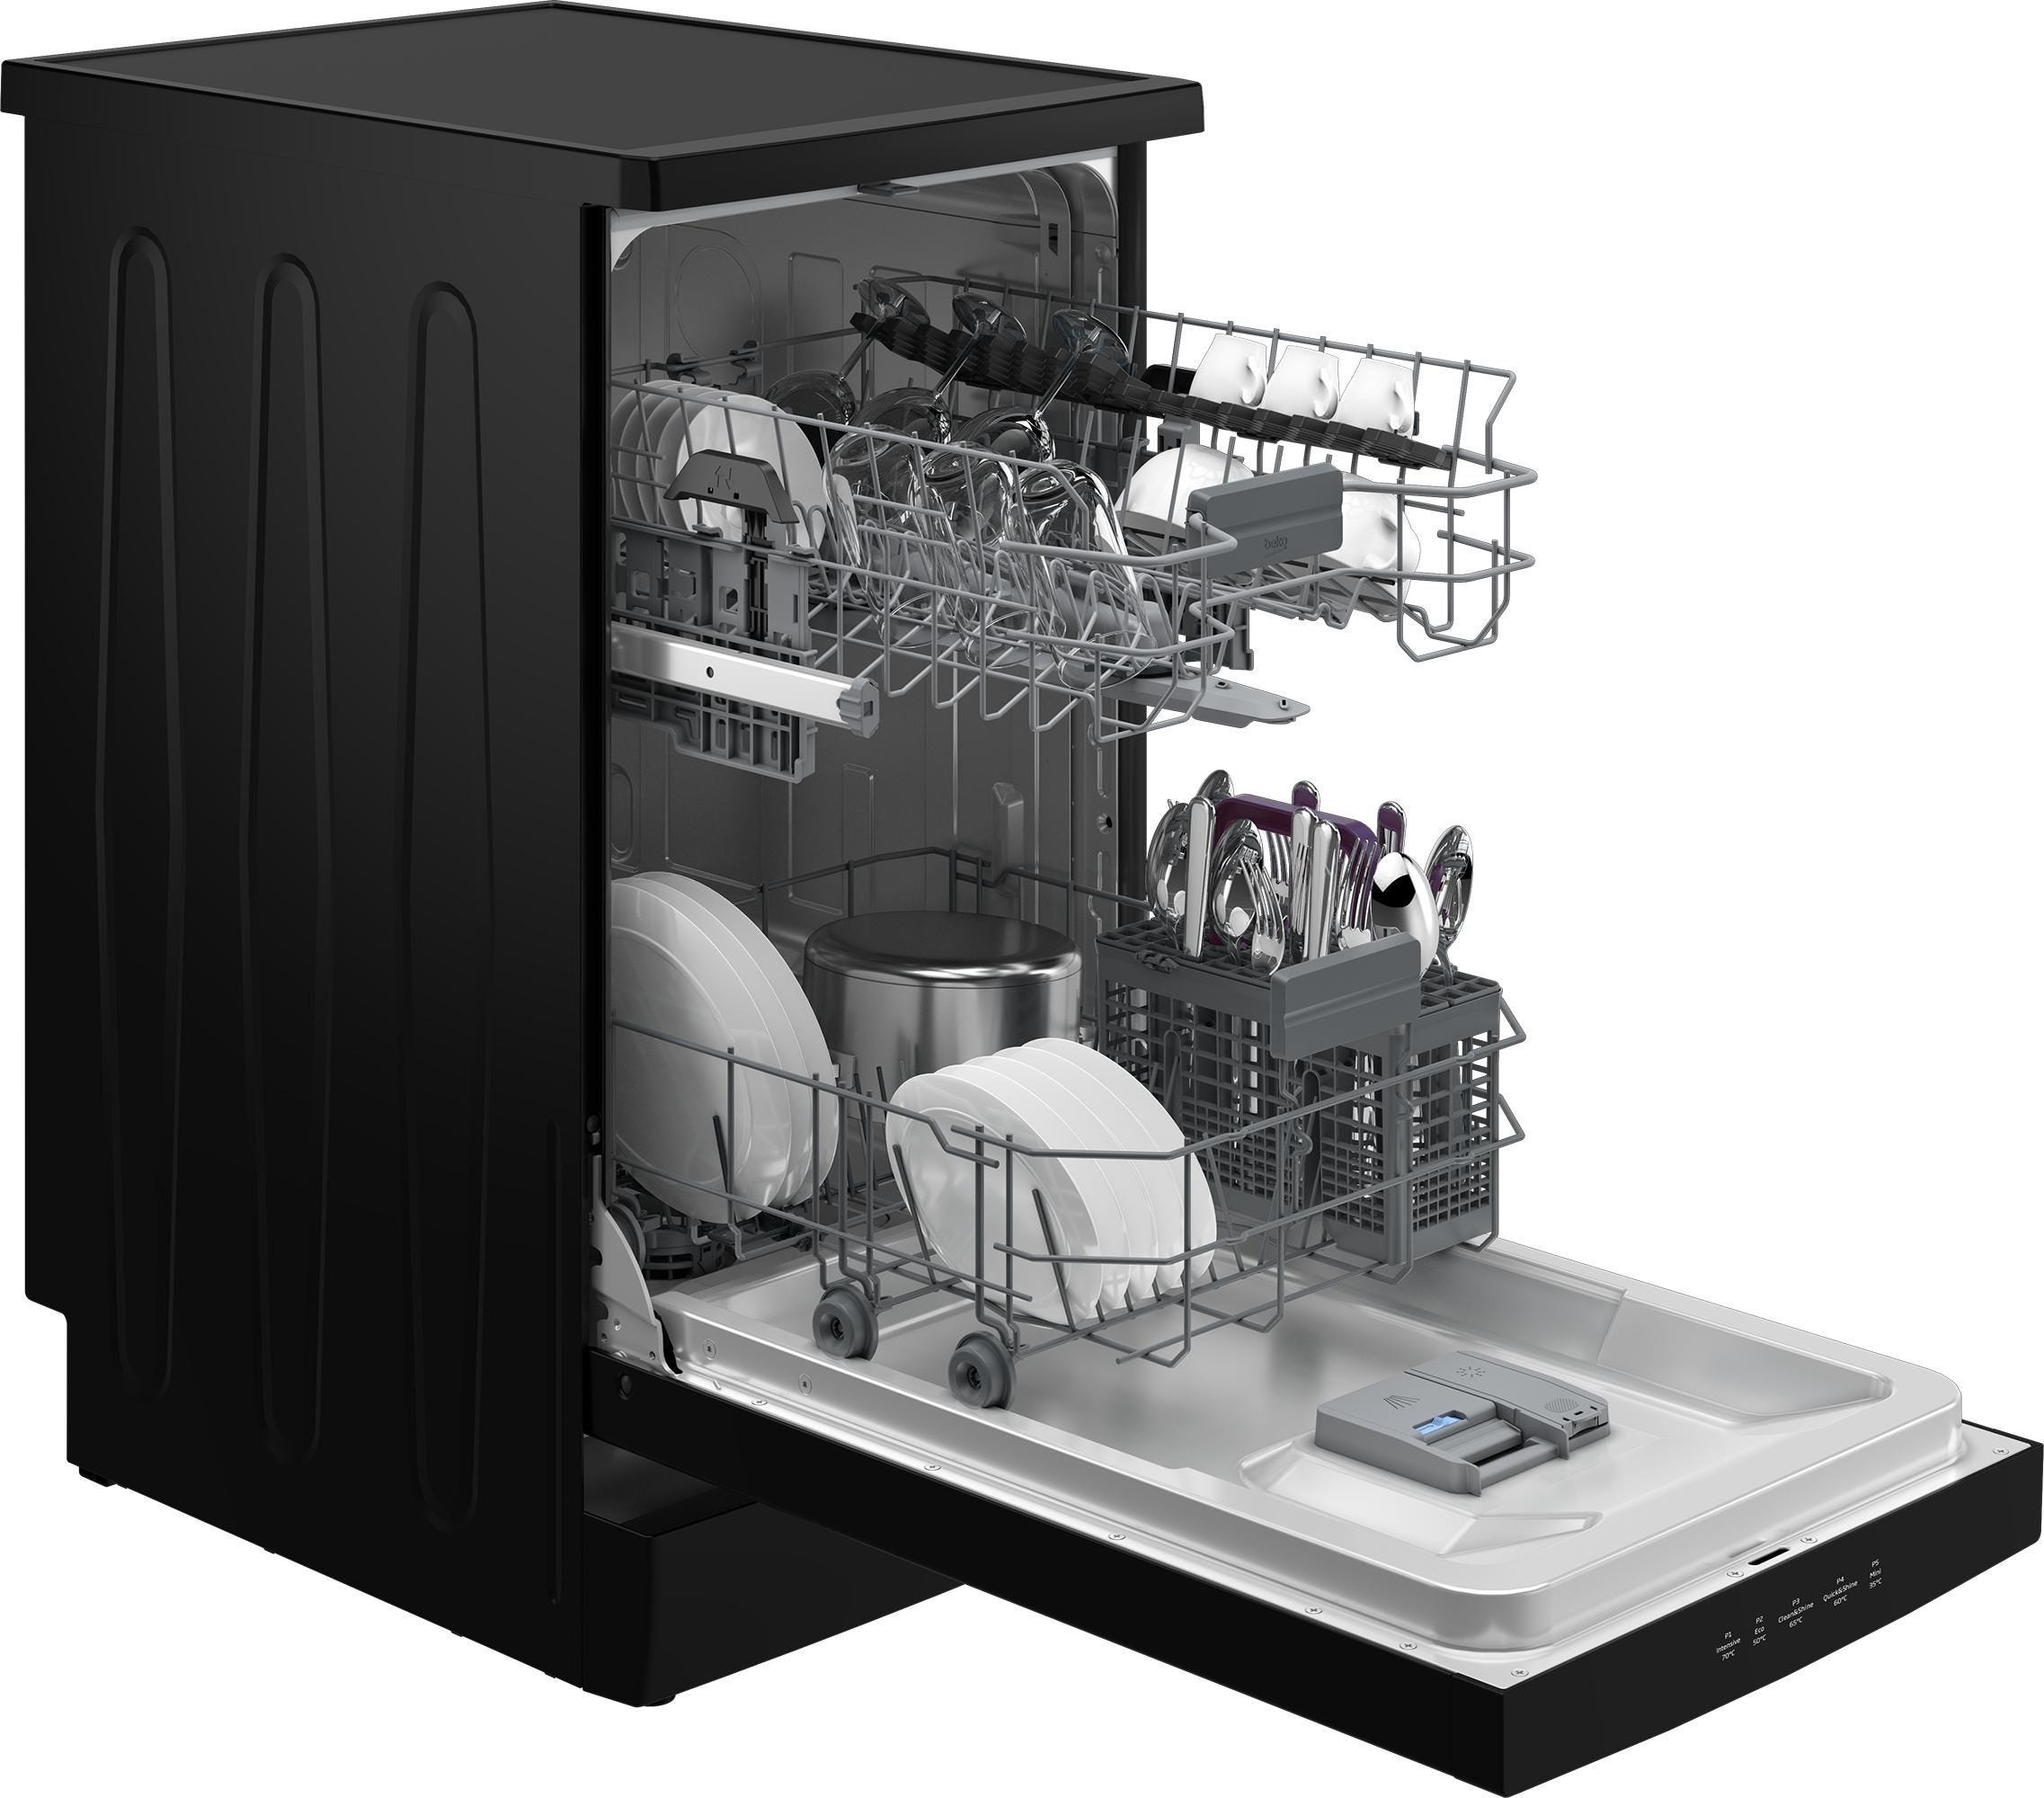 Beko b300 Digital Dishwasher With Inverter Technology, 10 Place Settings, 5 Programs, Black - BDFS15020B